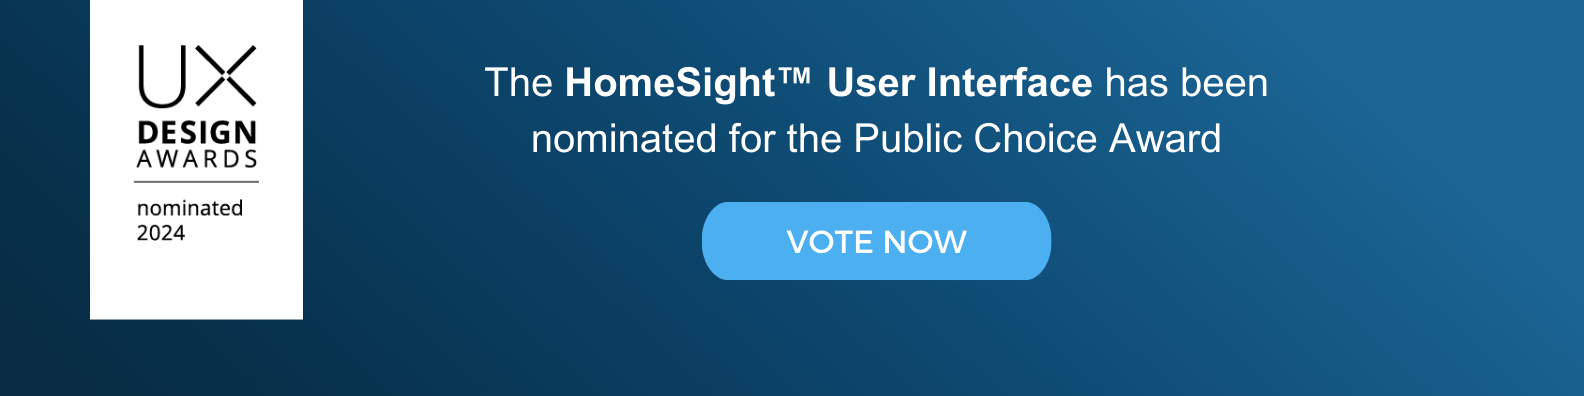 UXDesignAward_HomeSight_Vote_Website-banner